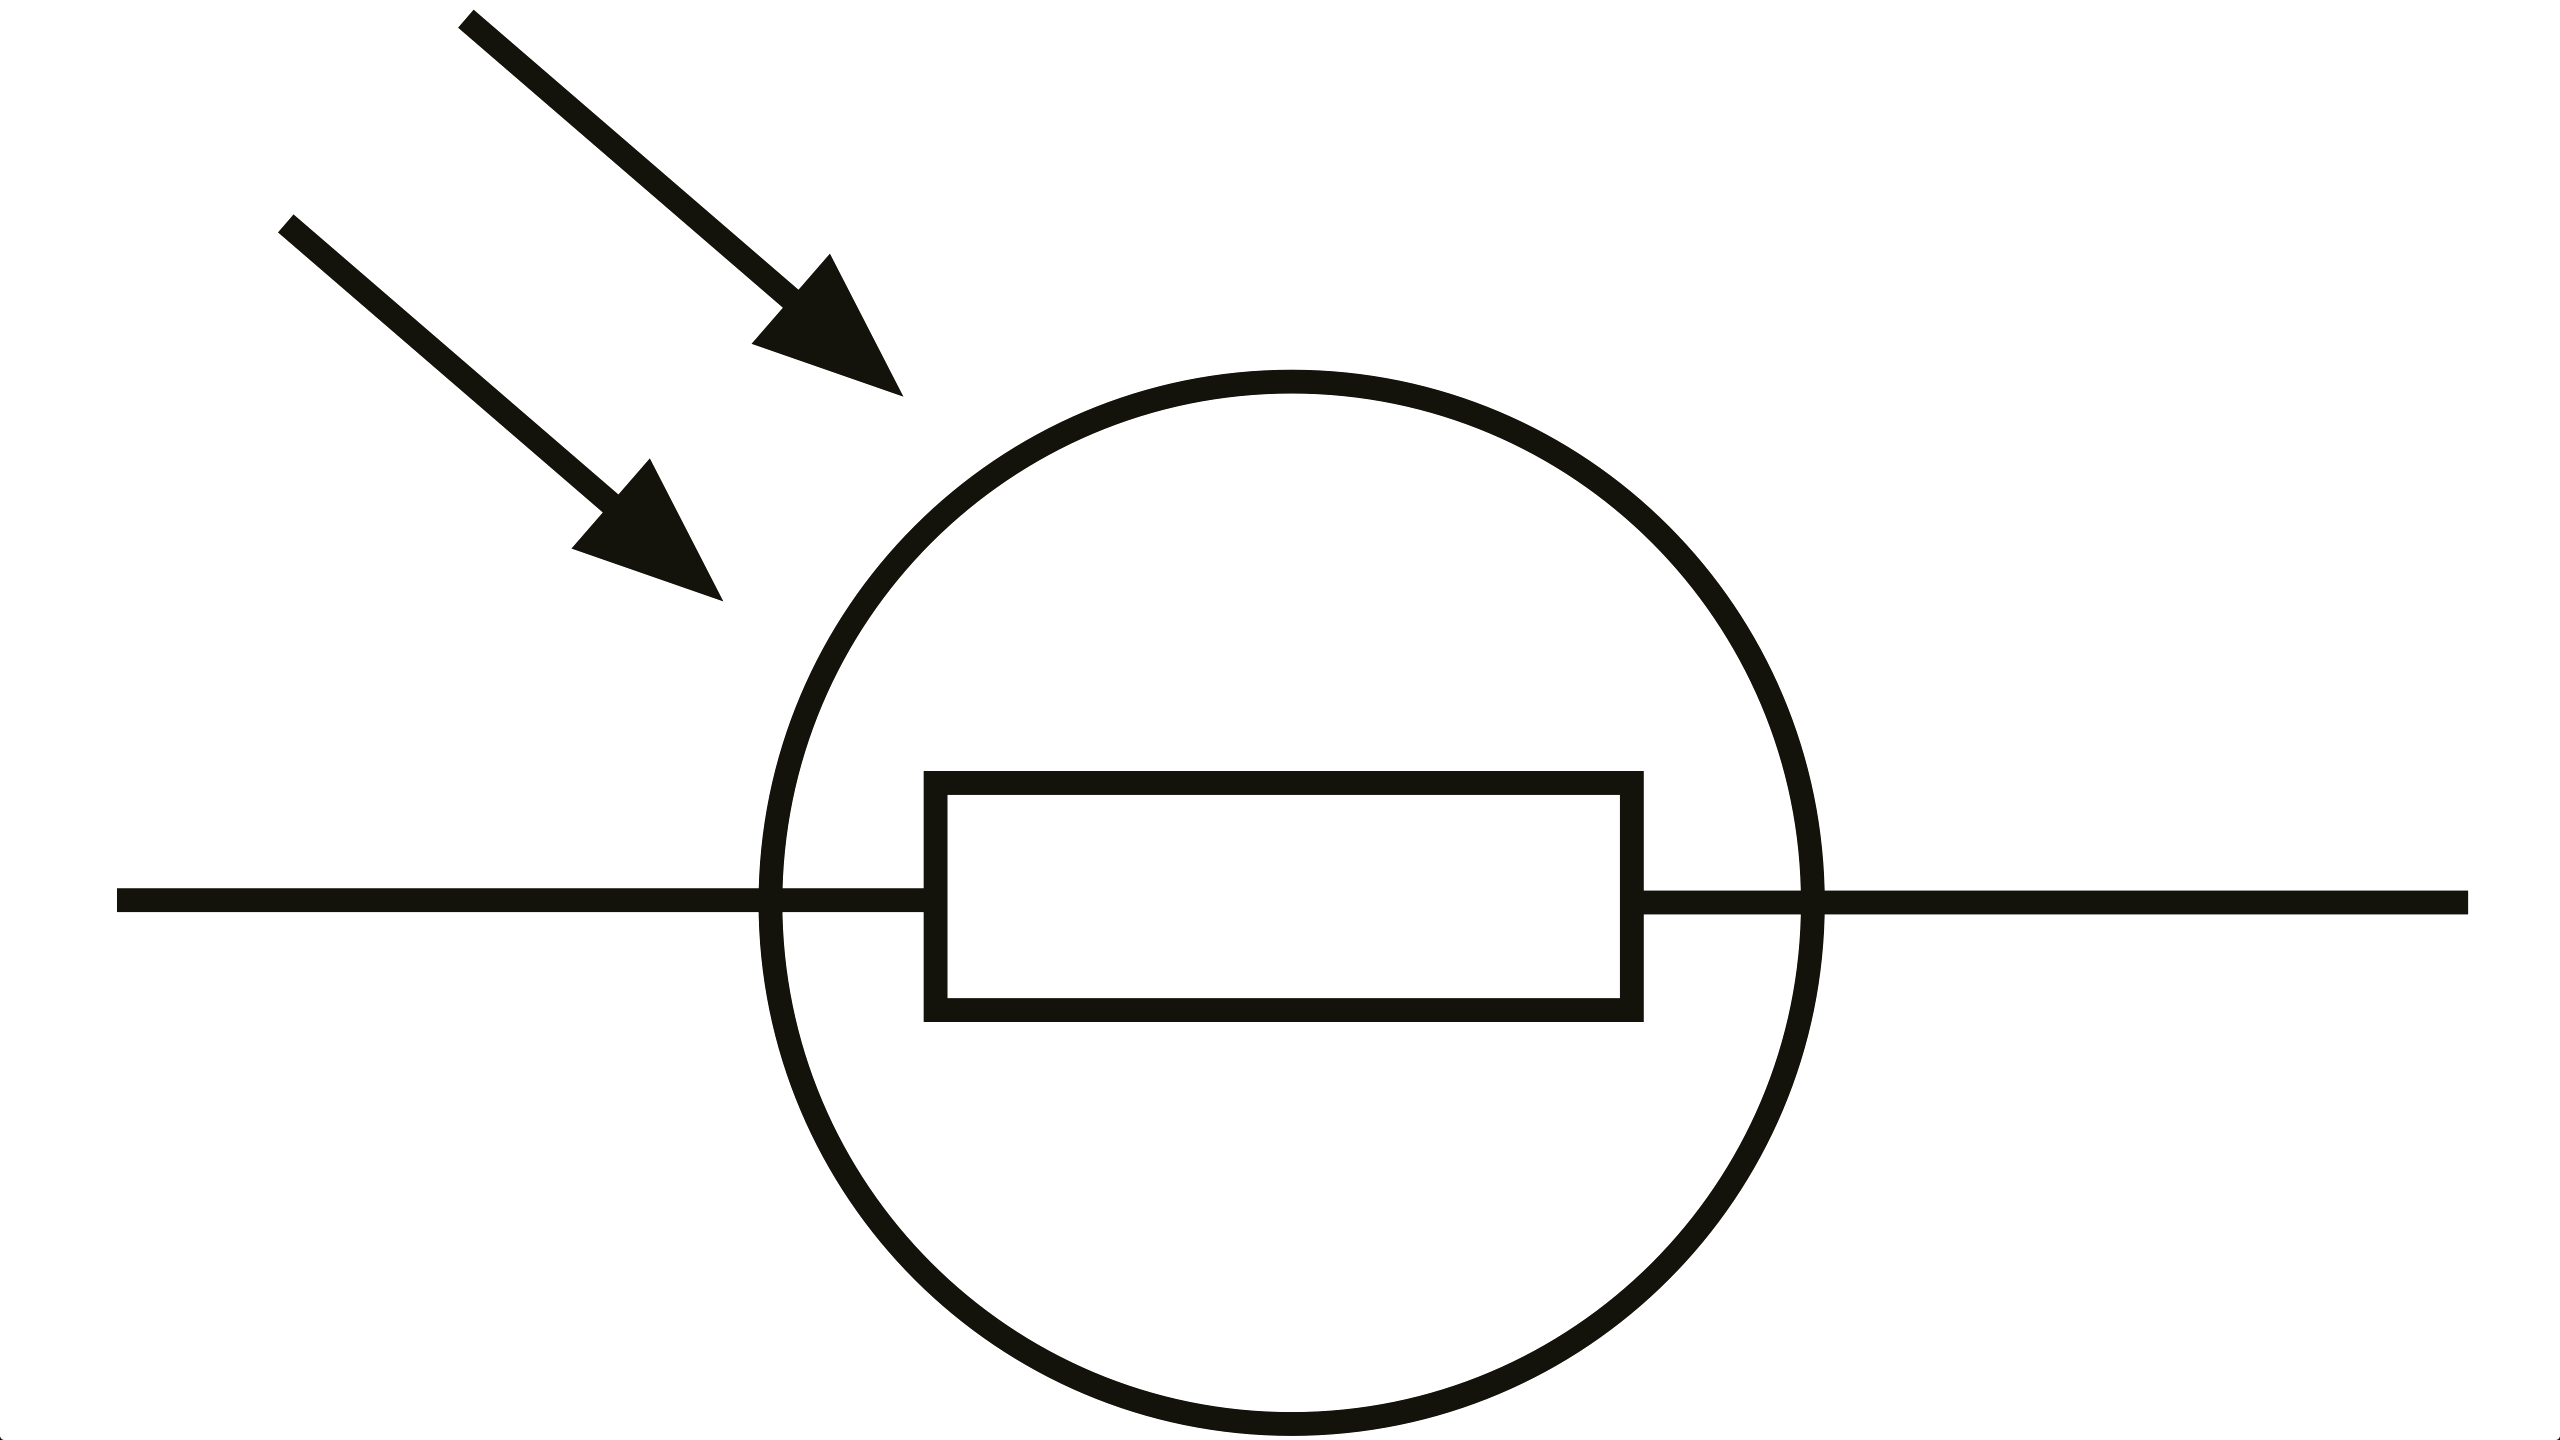 Component. symbol of a resistor: Resistor Symbols Clipart Best ...